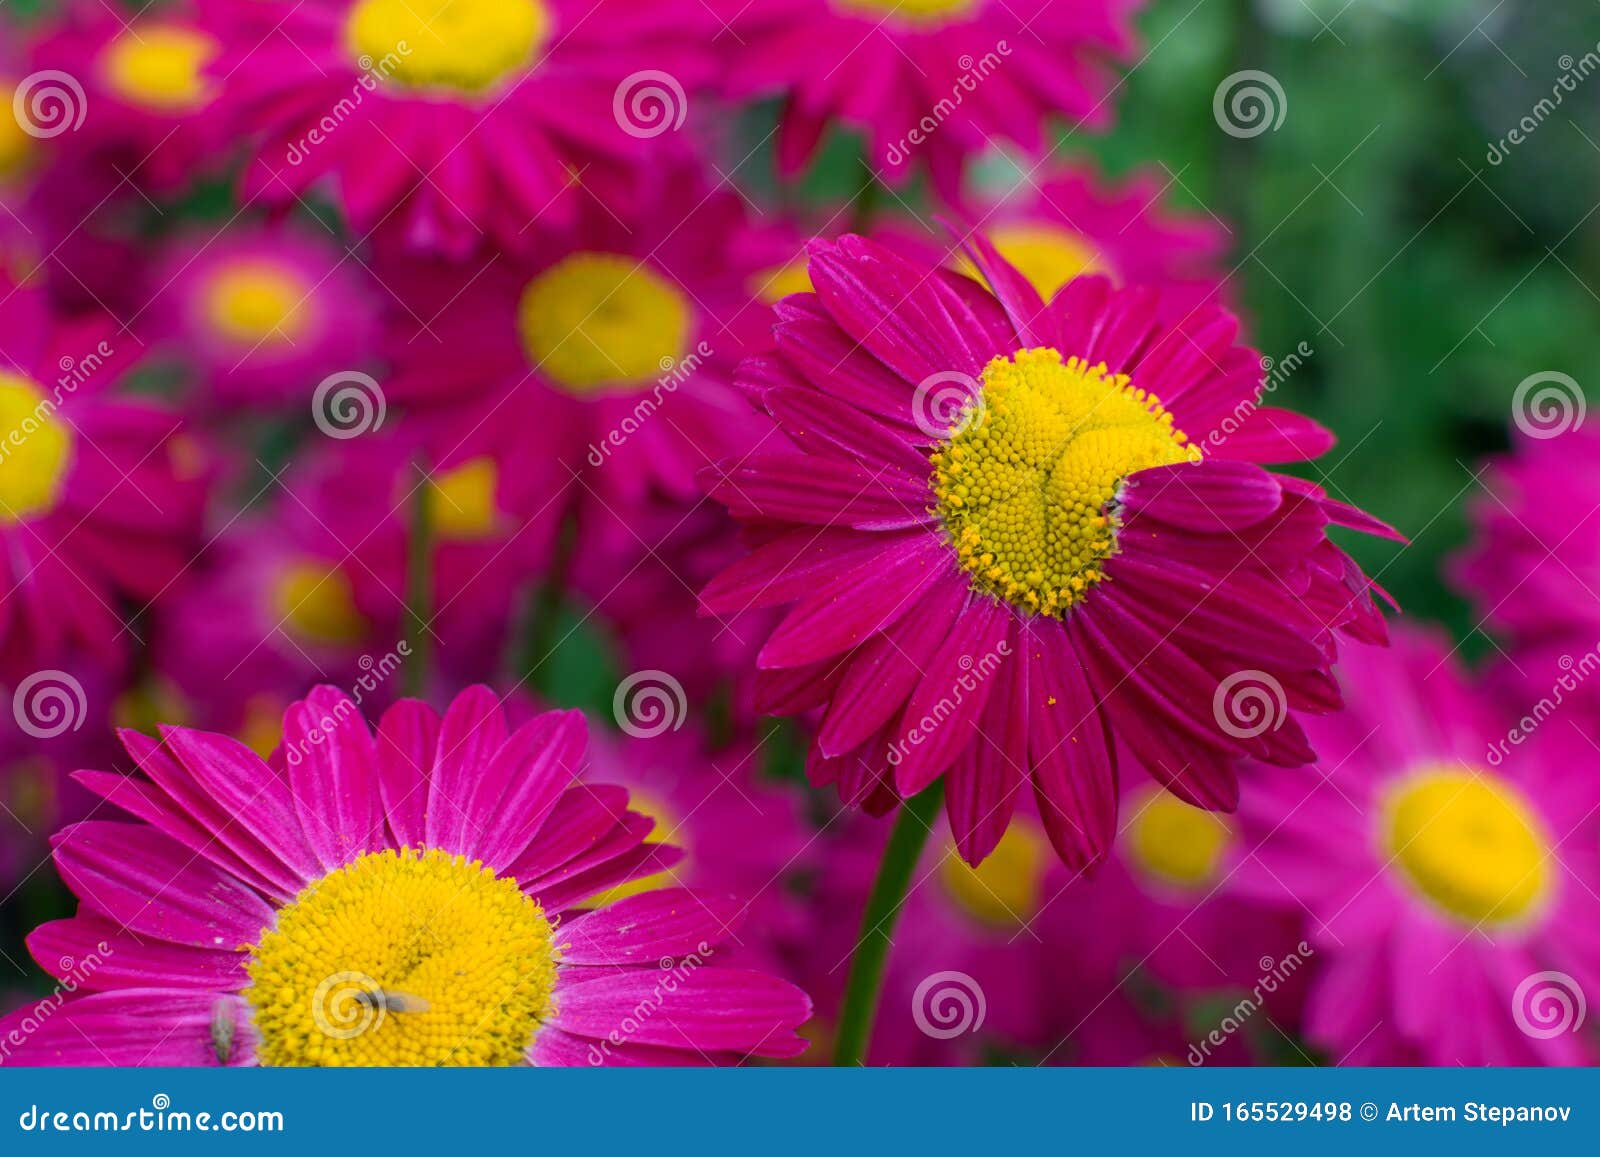 Beautiful Red Argyranthemum Marguerite Marguerite Daisy Or Dill Daisy Stock Photo Image Of Daisies Botany 165529498